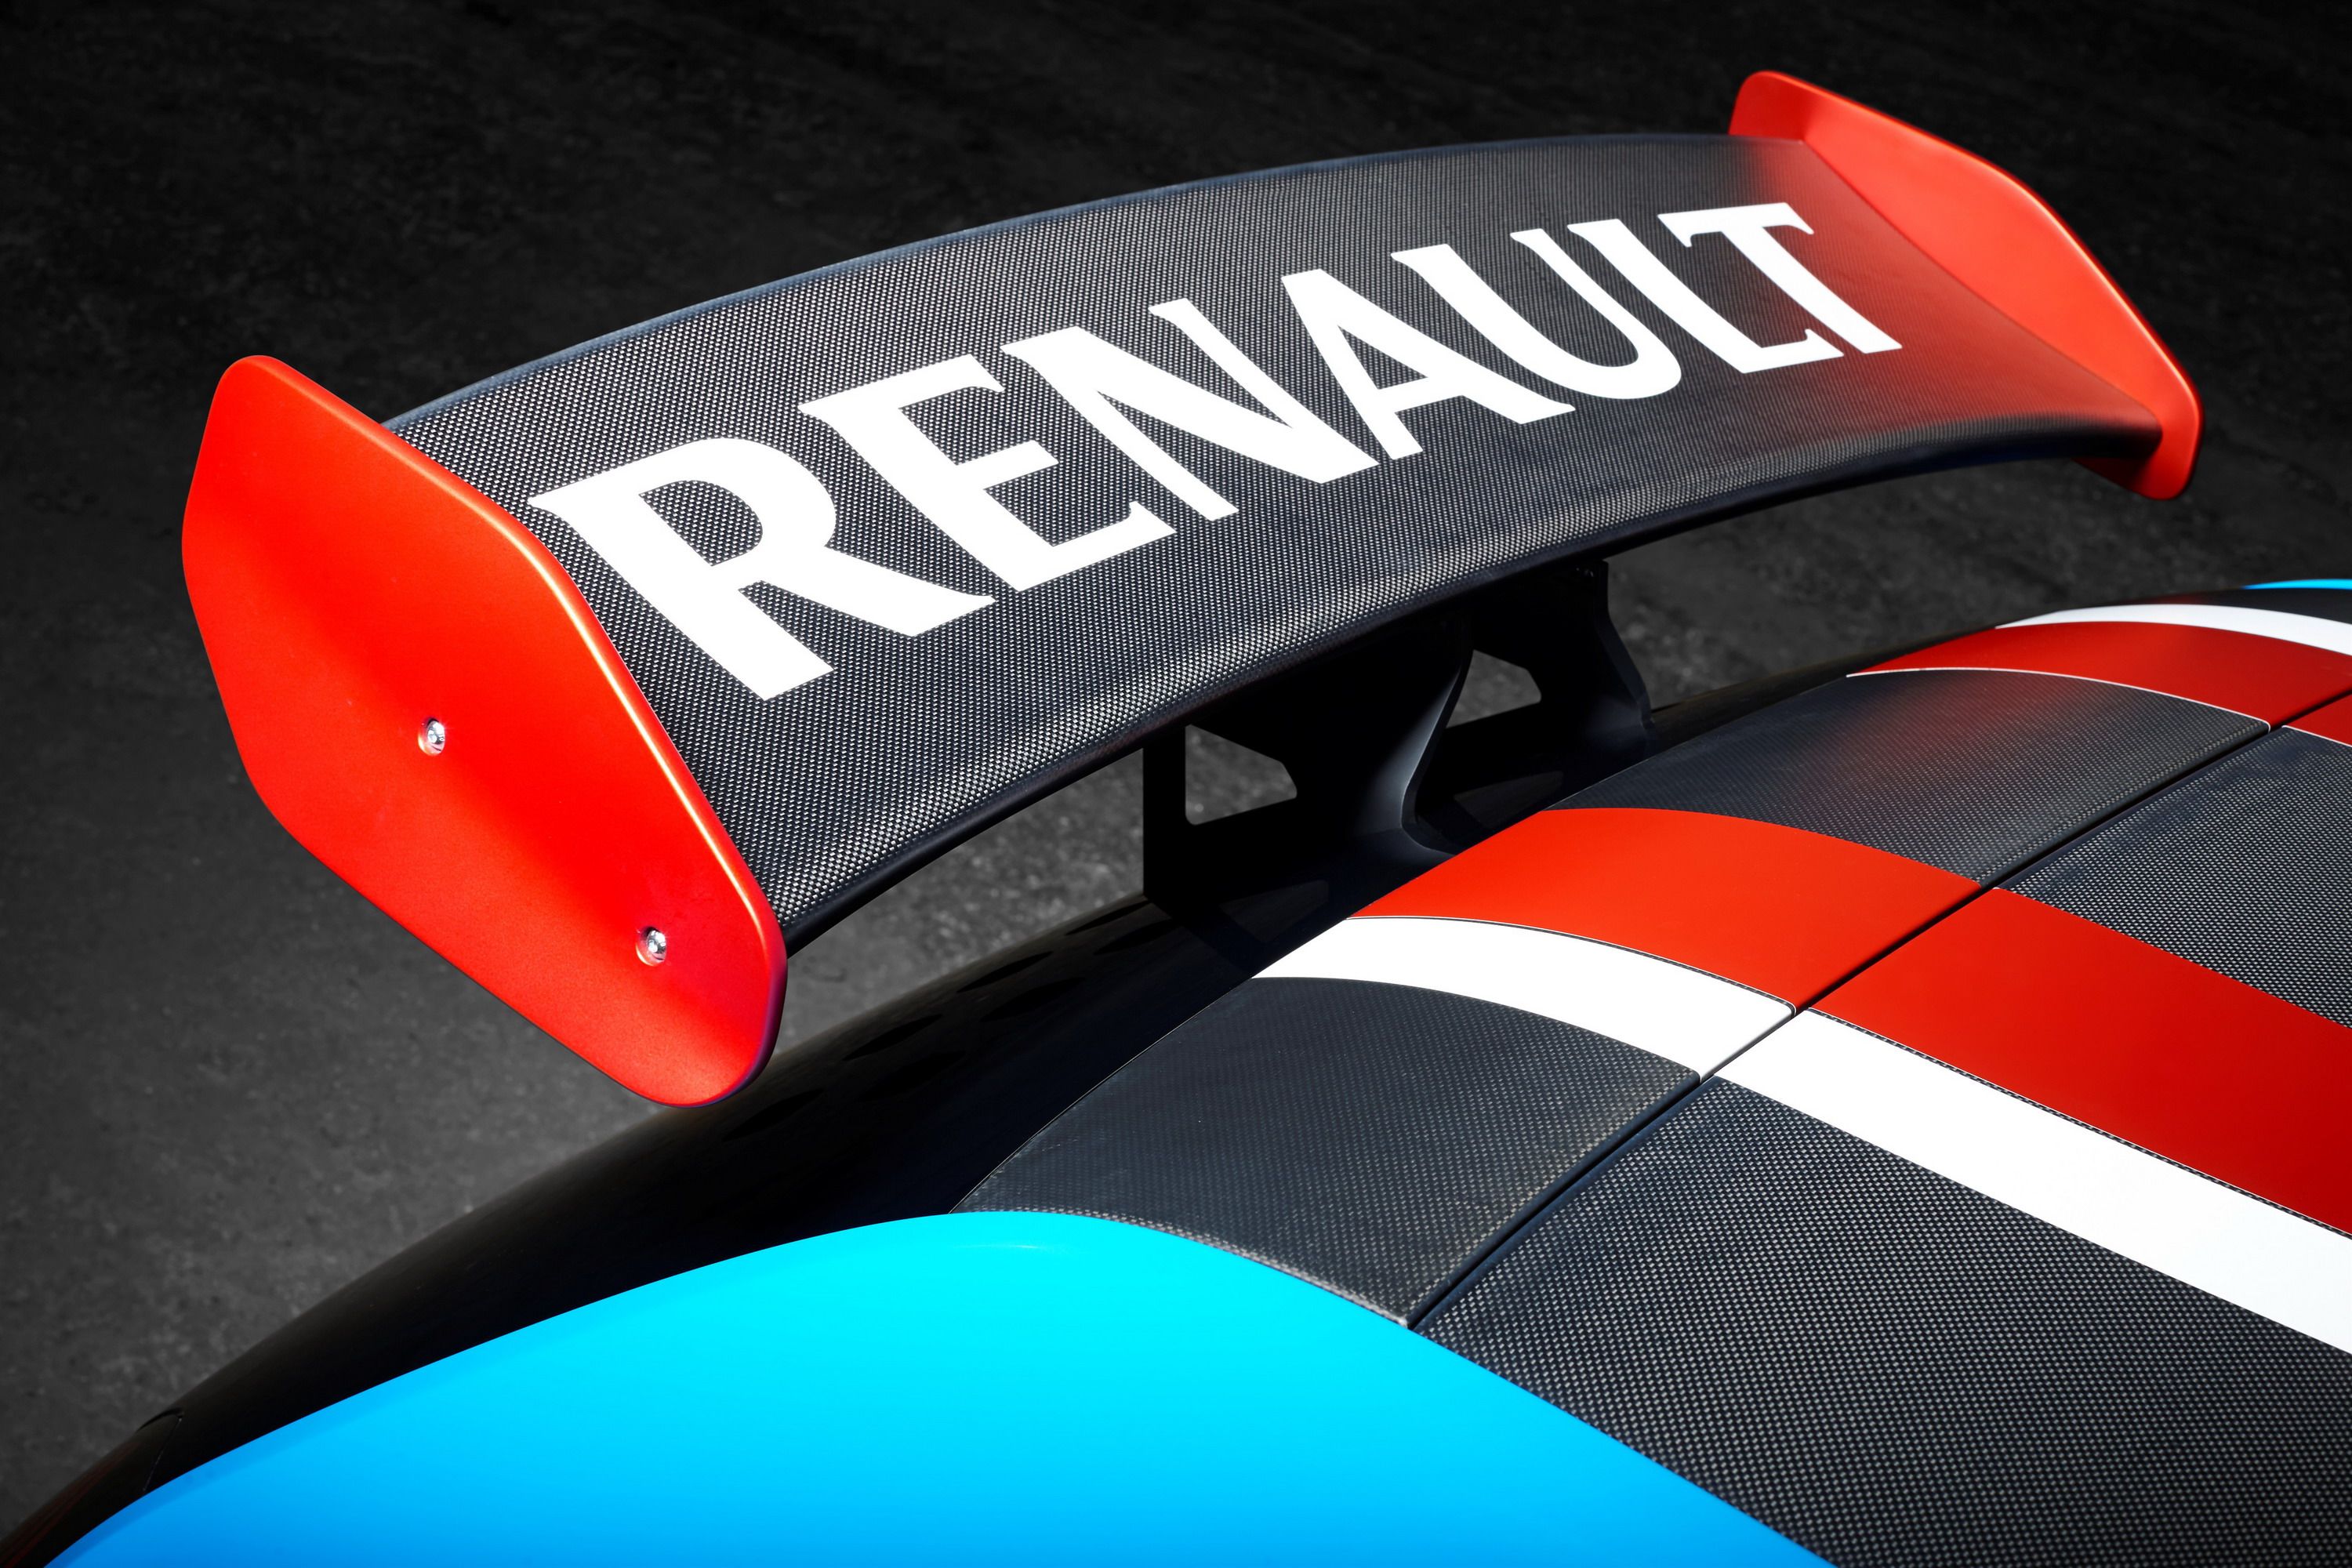 2013 Renault Twin'Run Concept